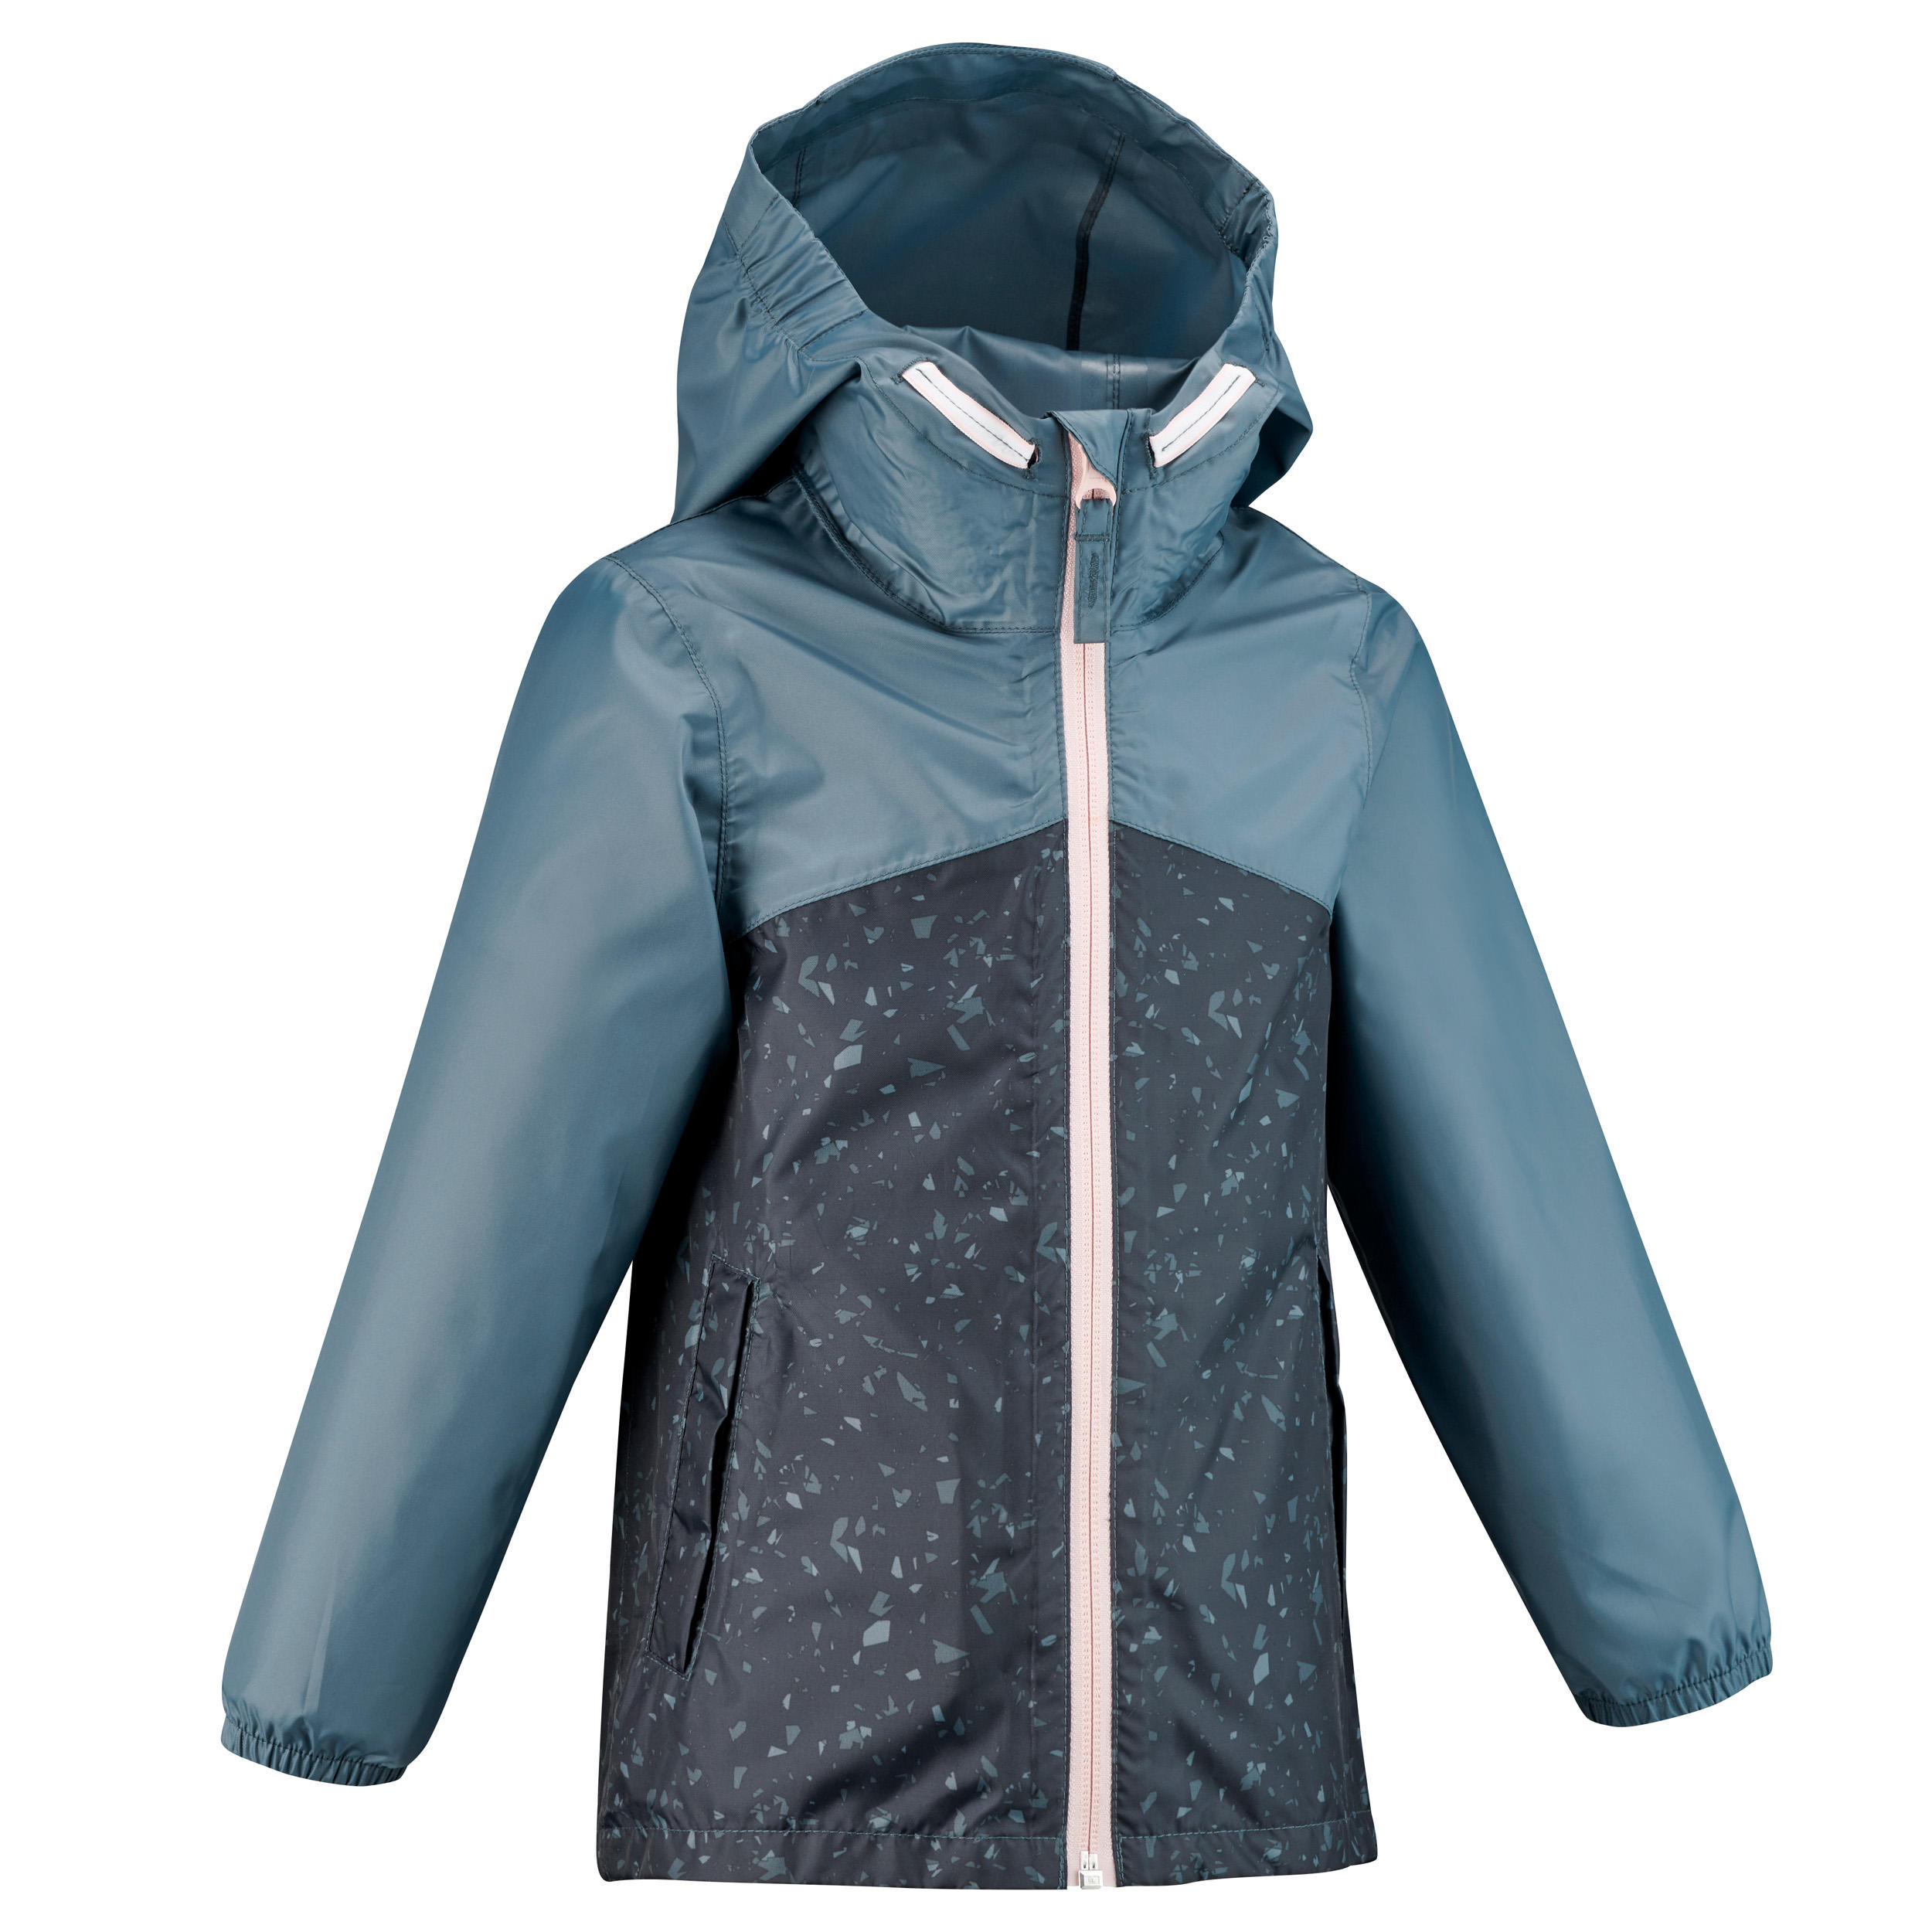 Jachetă Impermeabilă Drumeție la munte MH150 Gri Copii 2-6 ani decathlon.ro  Imbracaminte trekking si drumetie